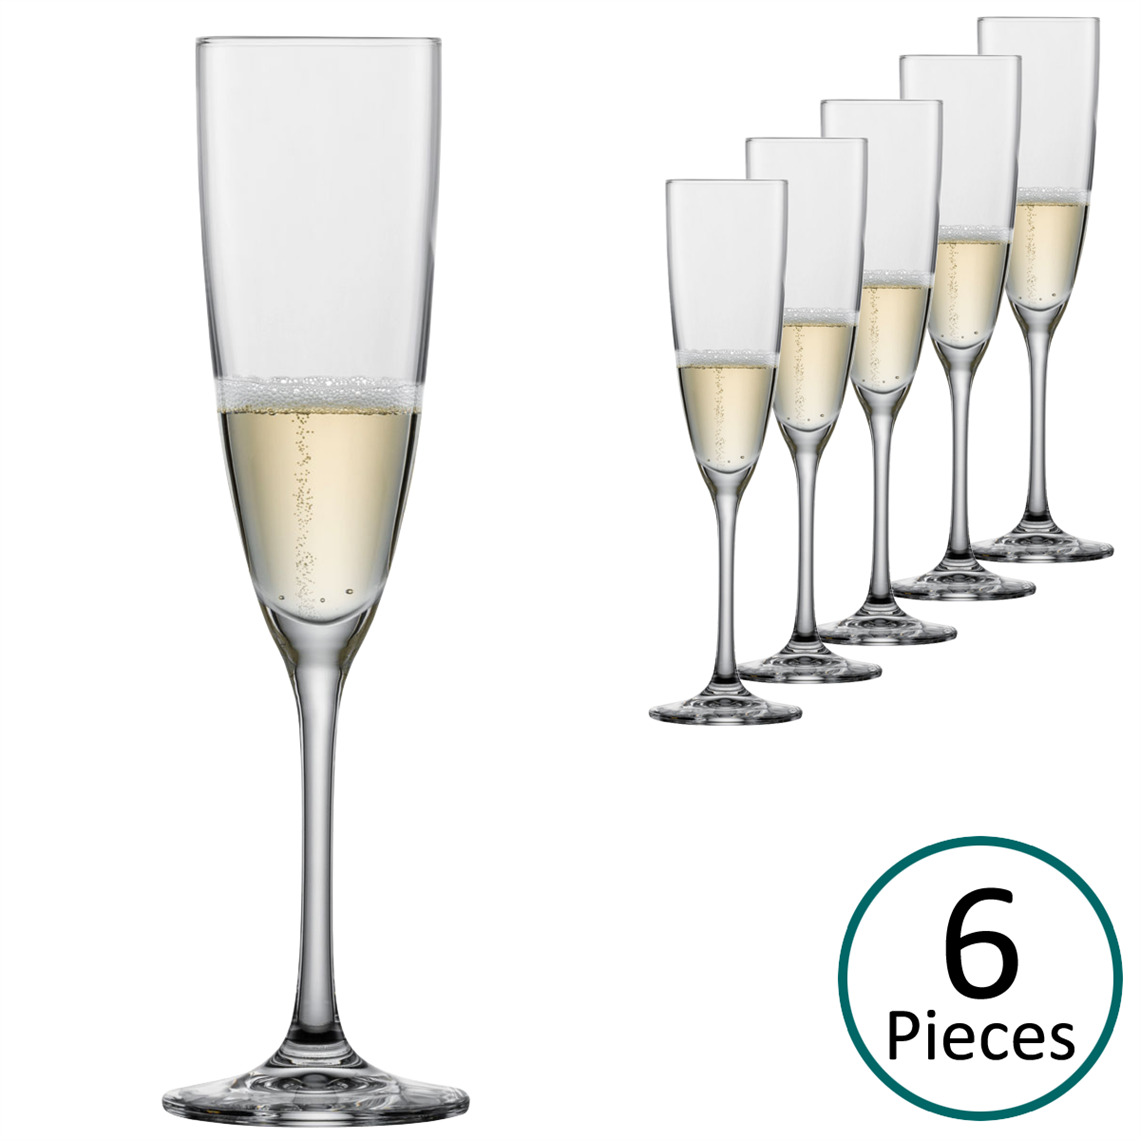 Schott Zwiesel Classico Champagne Glasses / Flute - Set of 6